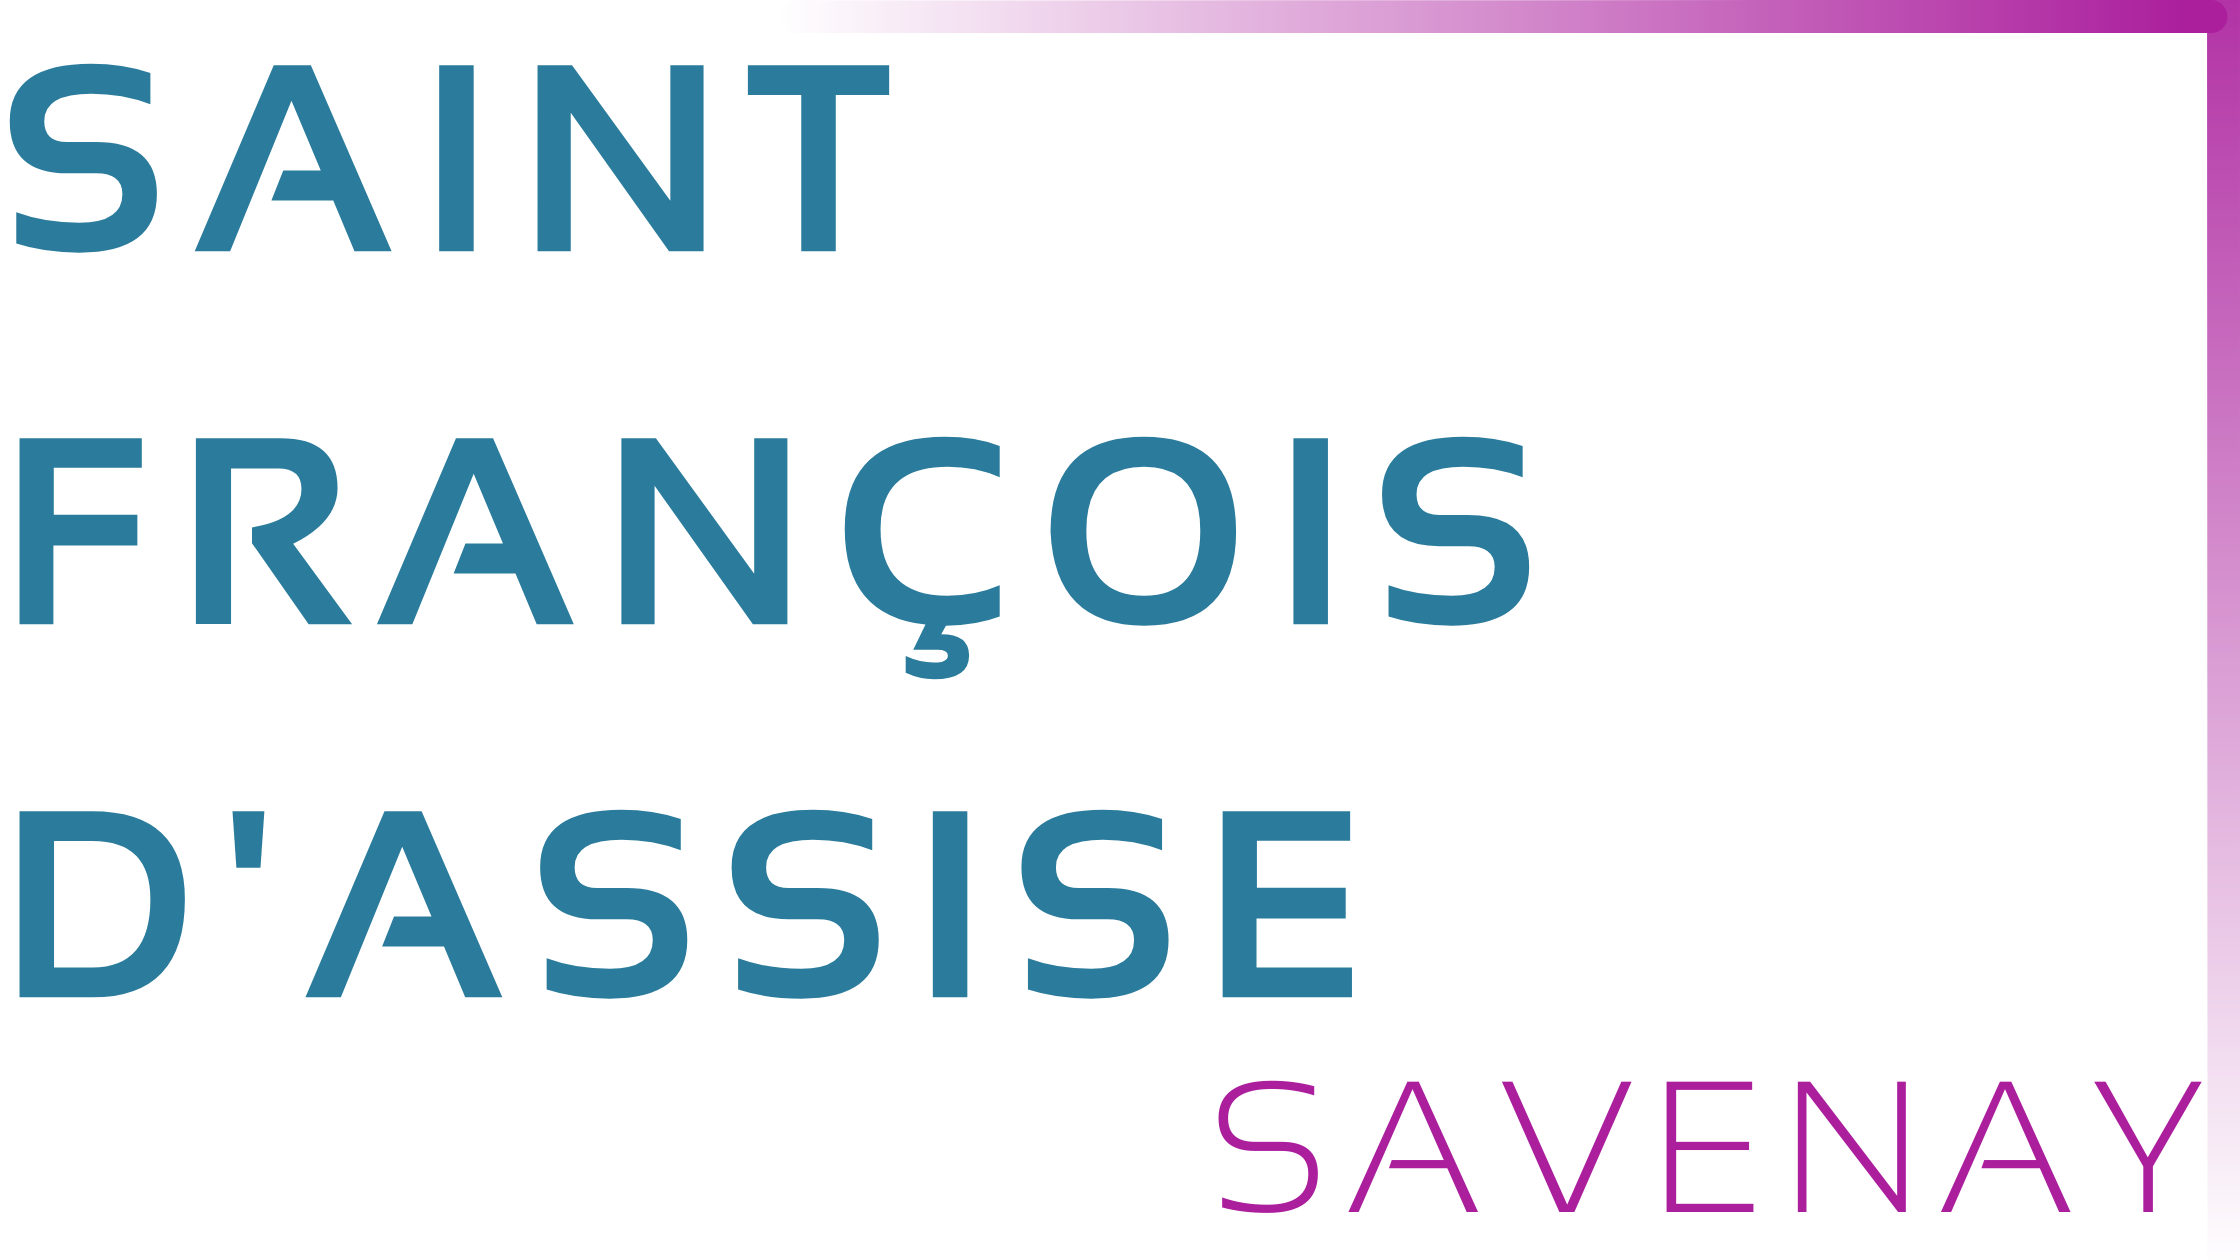 Saint-Francois-dassise